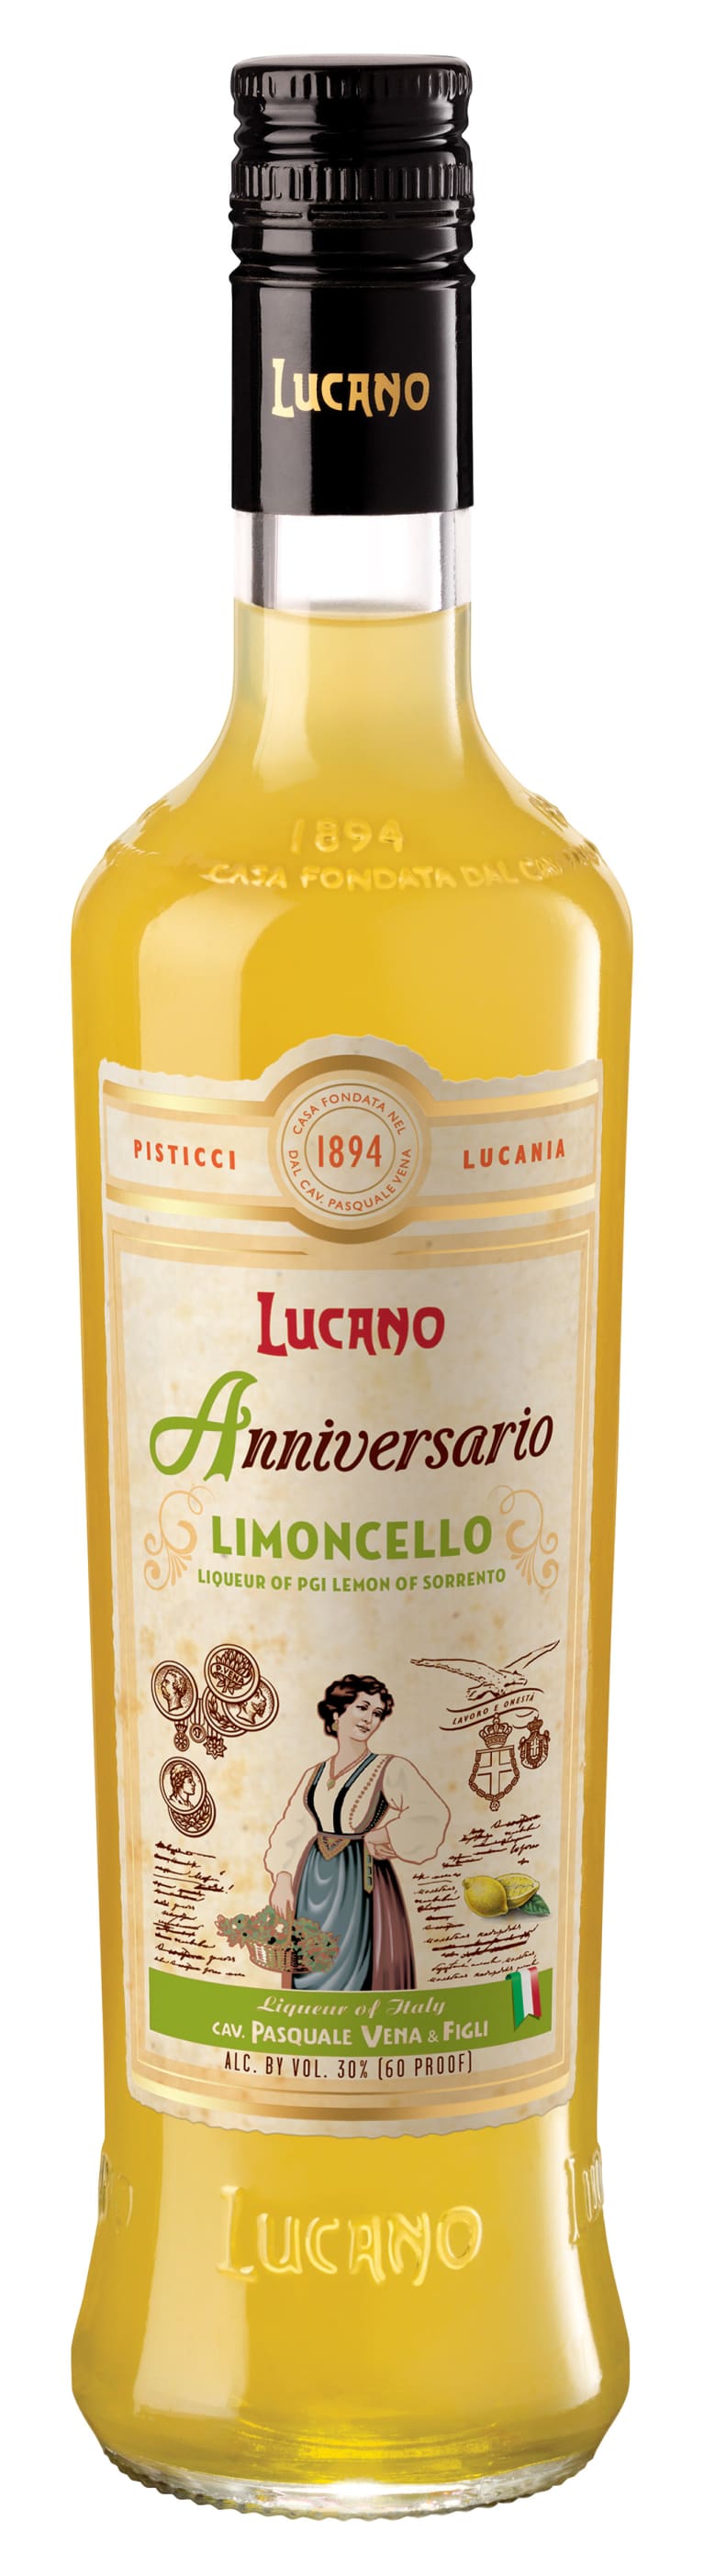 Begrenzte Zeit zum Schnäppchenpreis Lucano Limoncetta Sorrento Hamptons - Wine di Shoppe